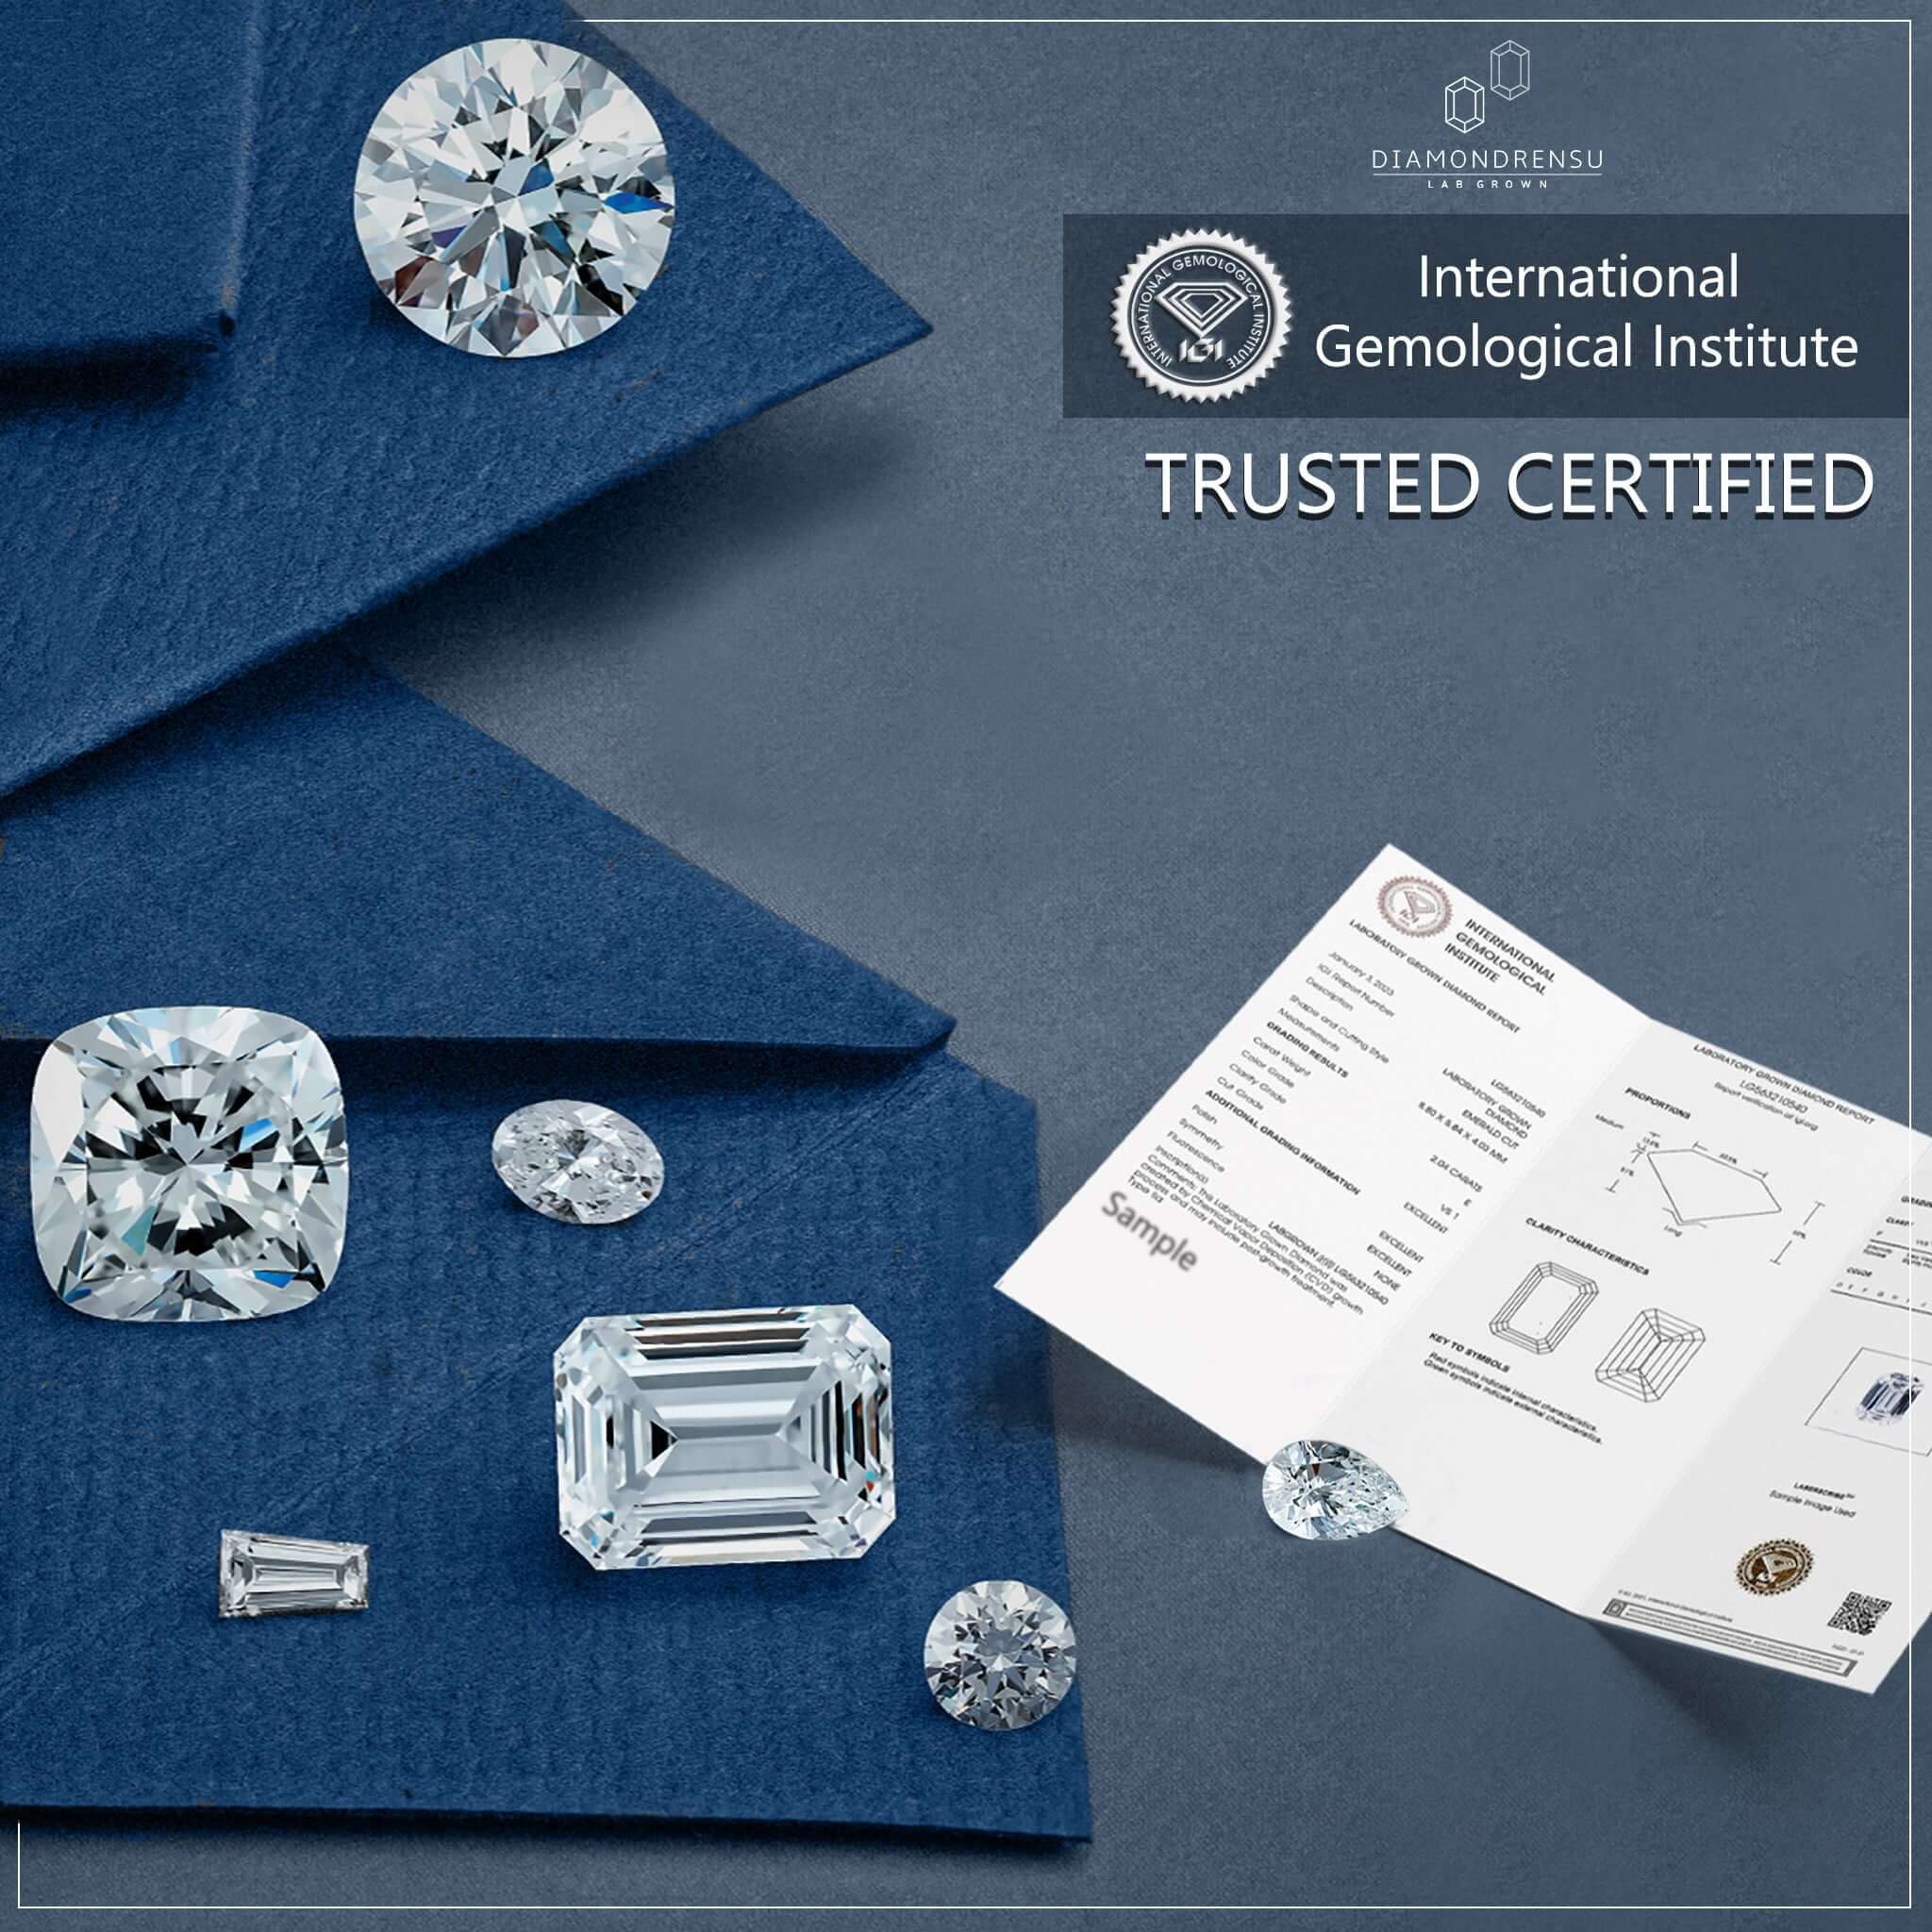 IGI Certified diamonds with IGI Certificate